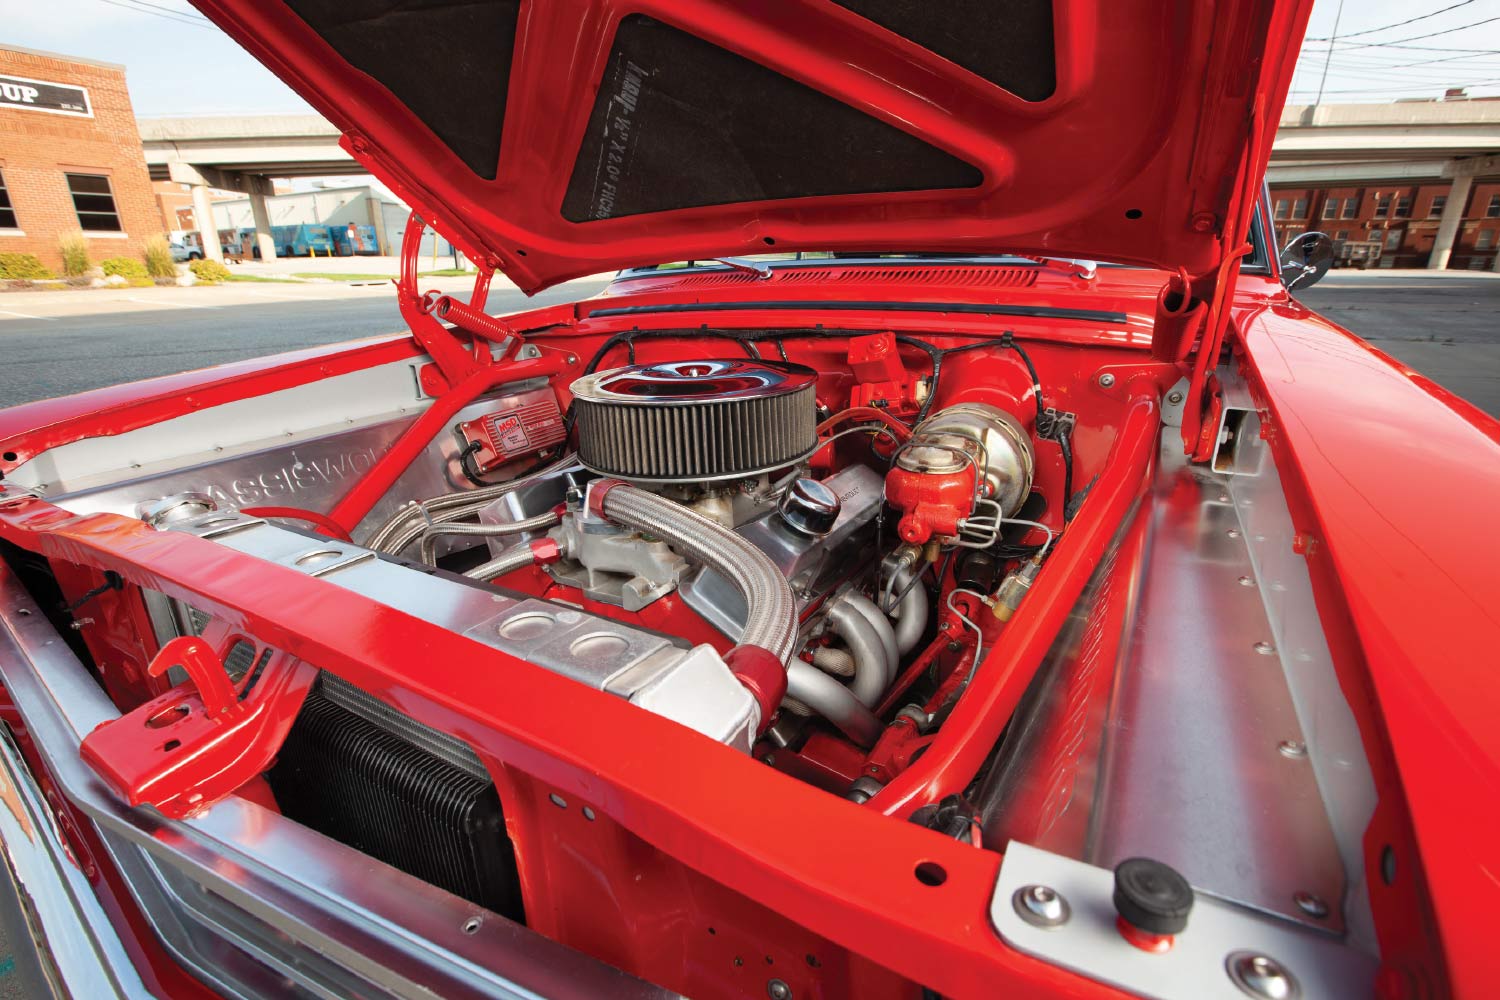 ’66 Chevy II's engine